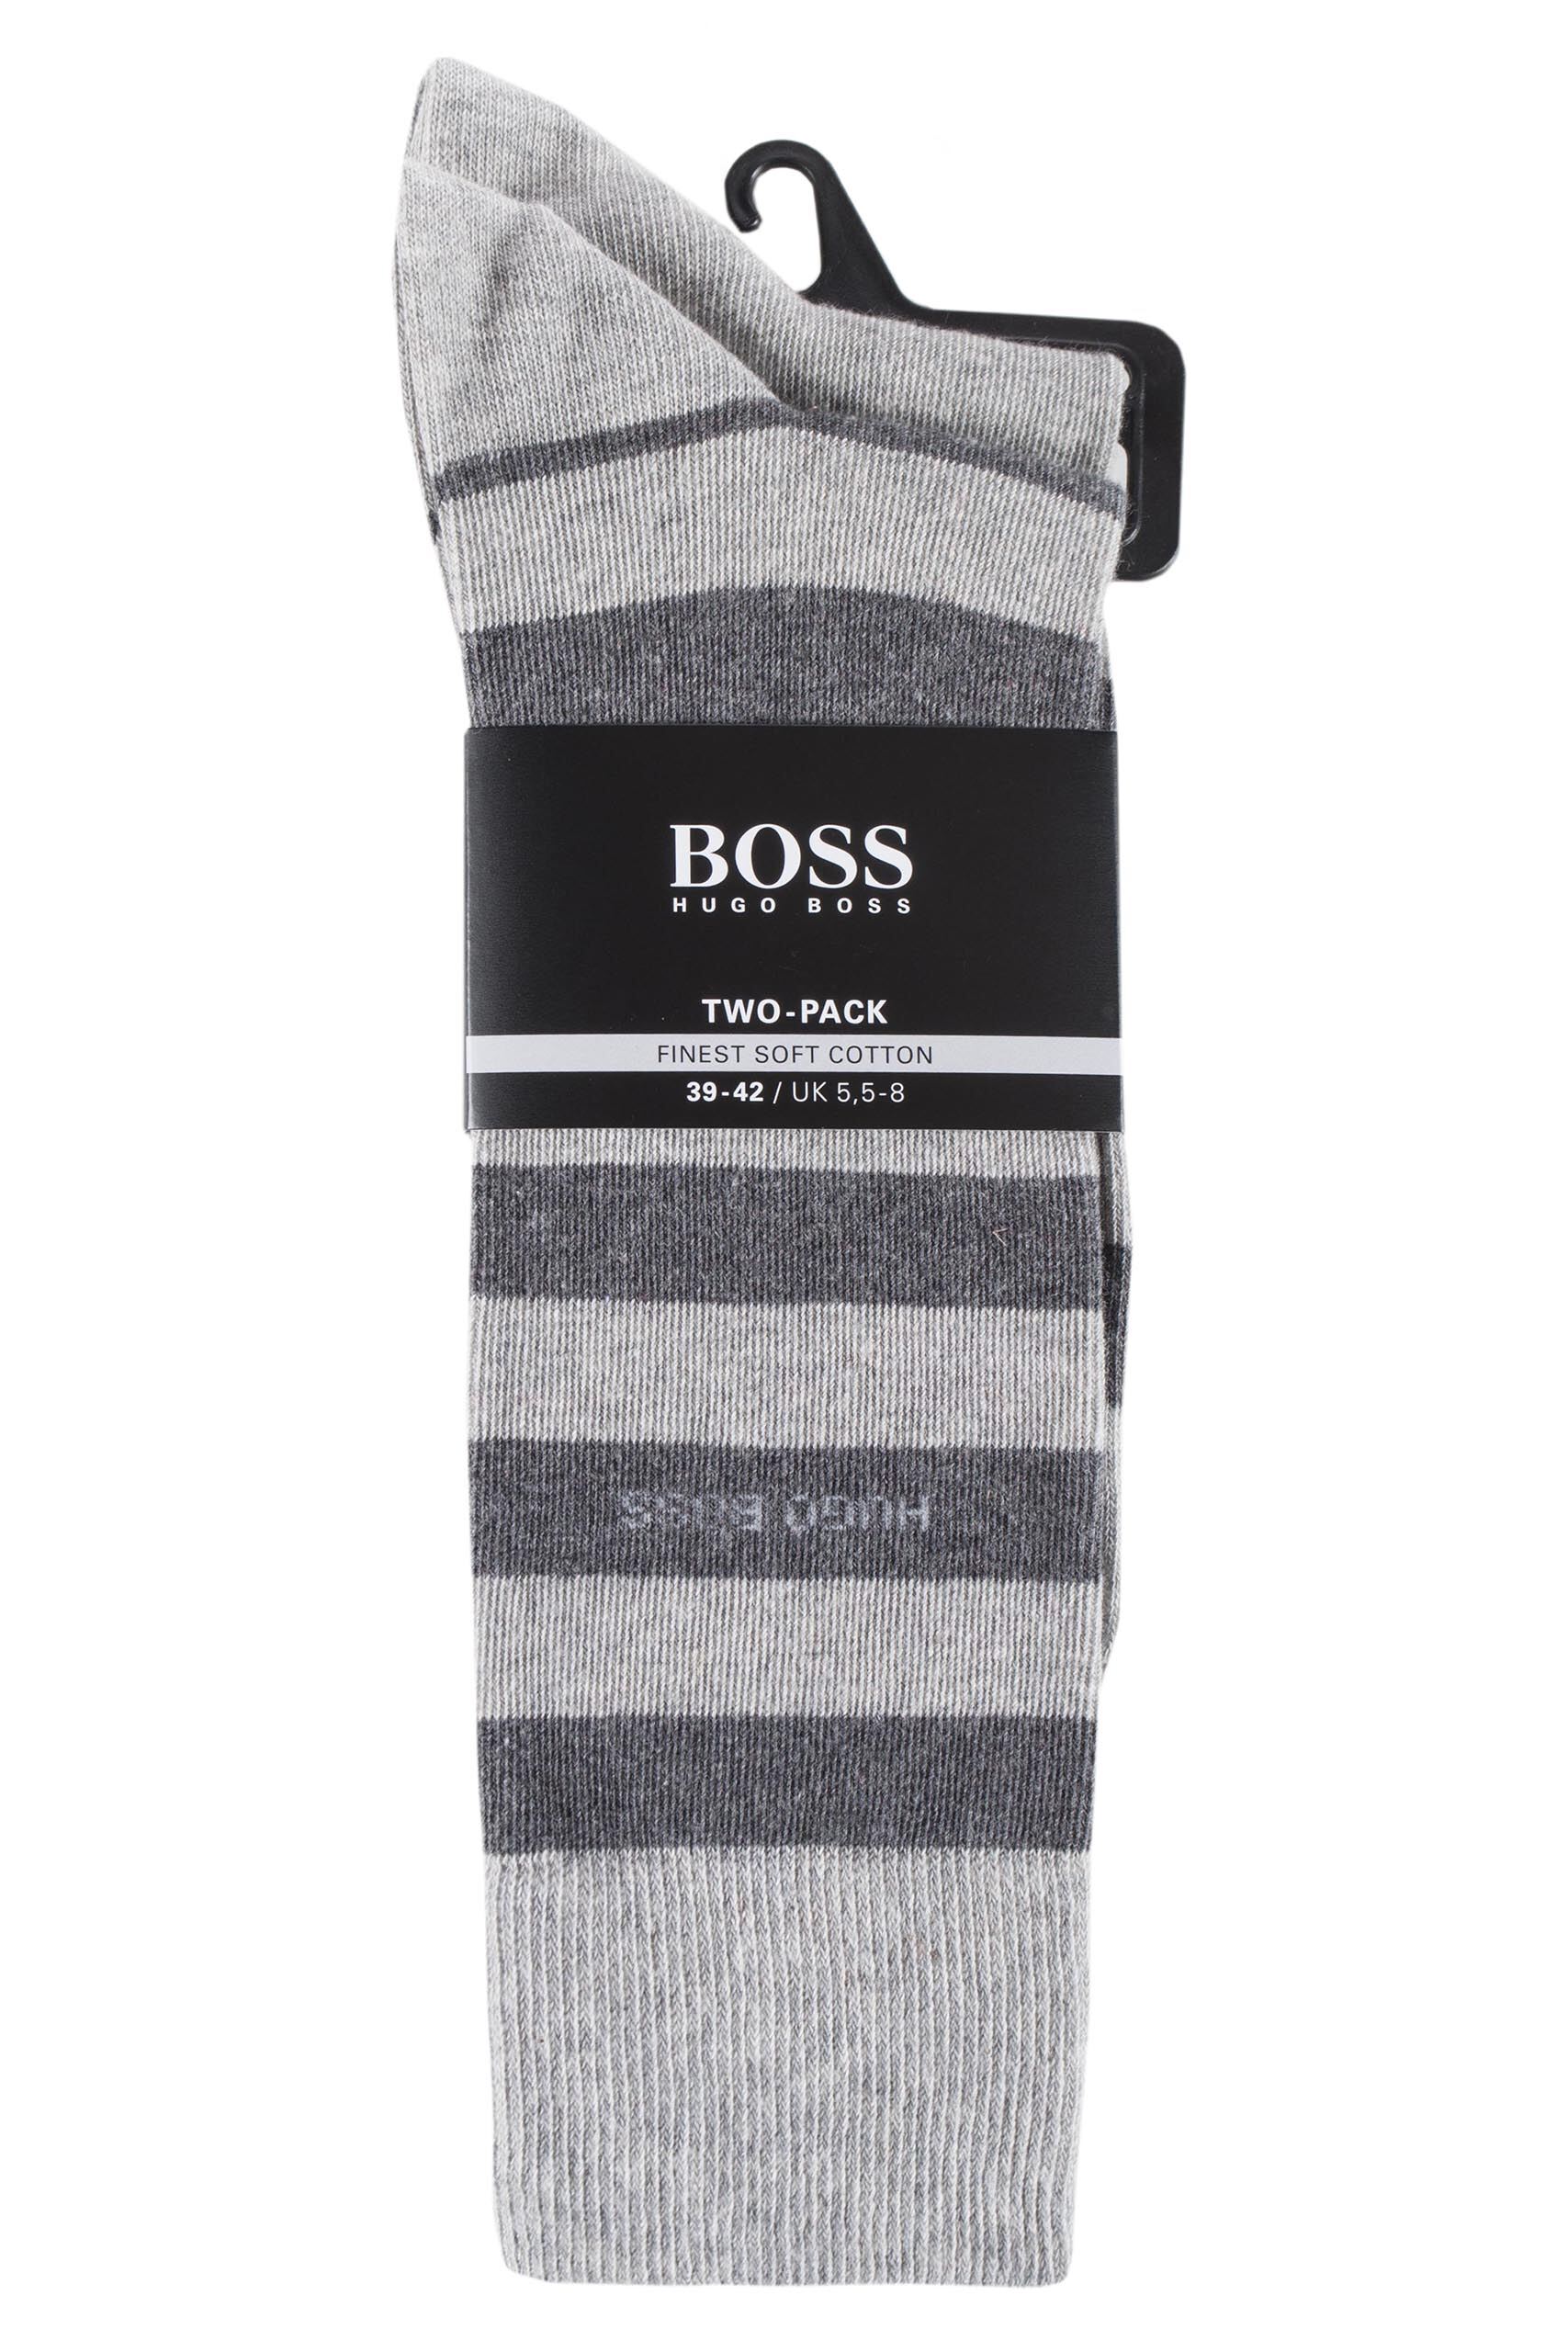 Hugo Boss Block Striped and Plain Combed Cotton Socks